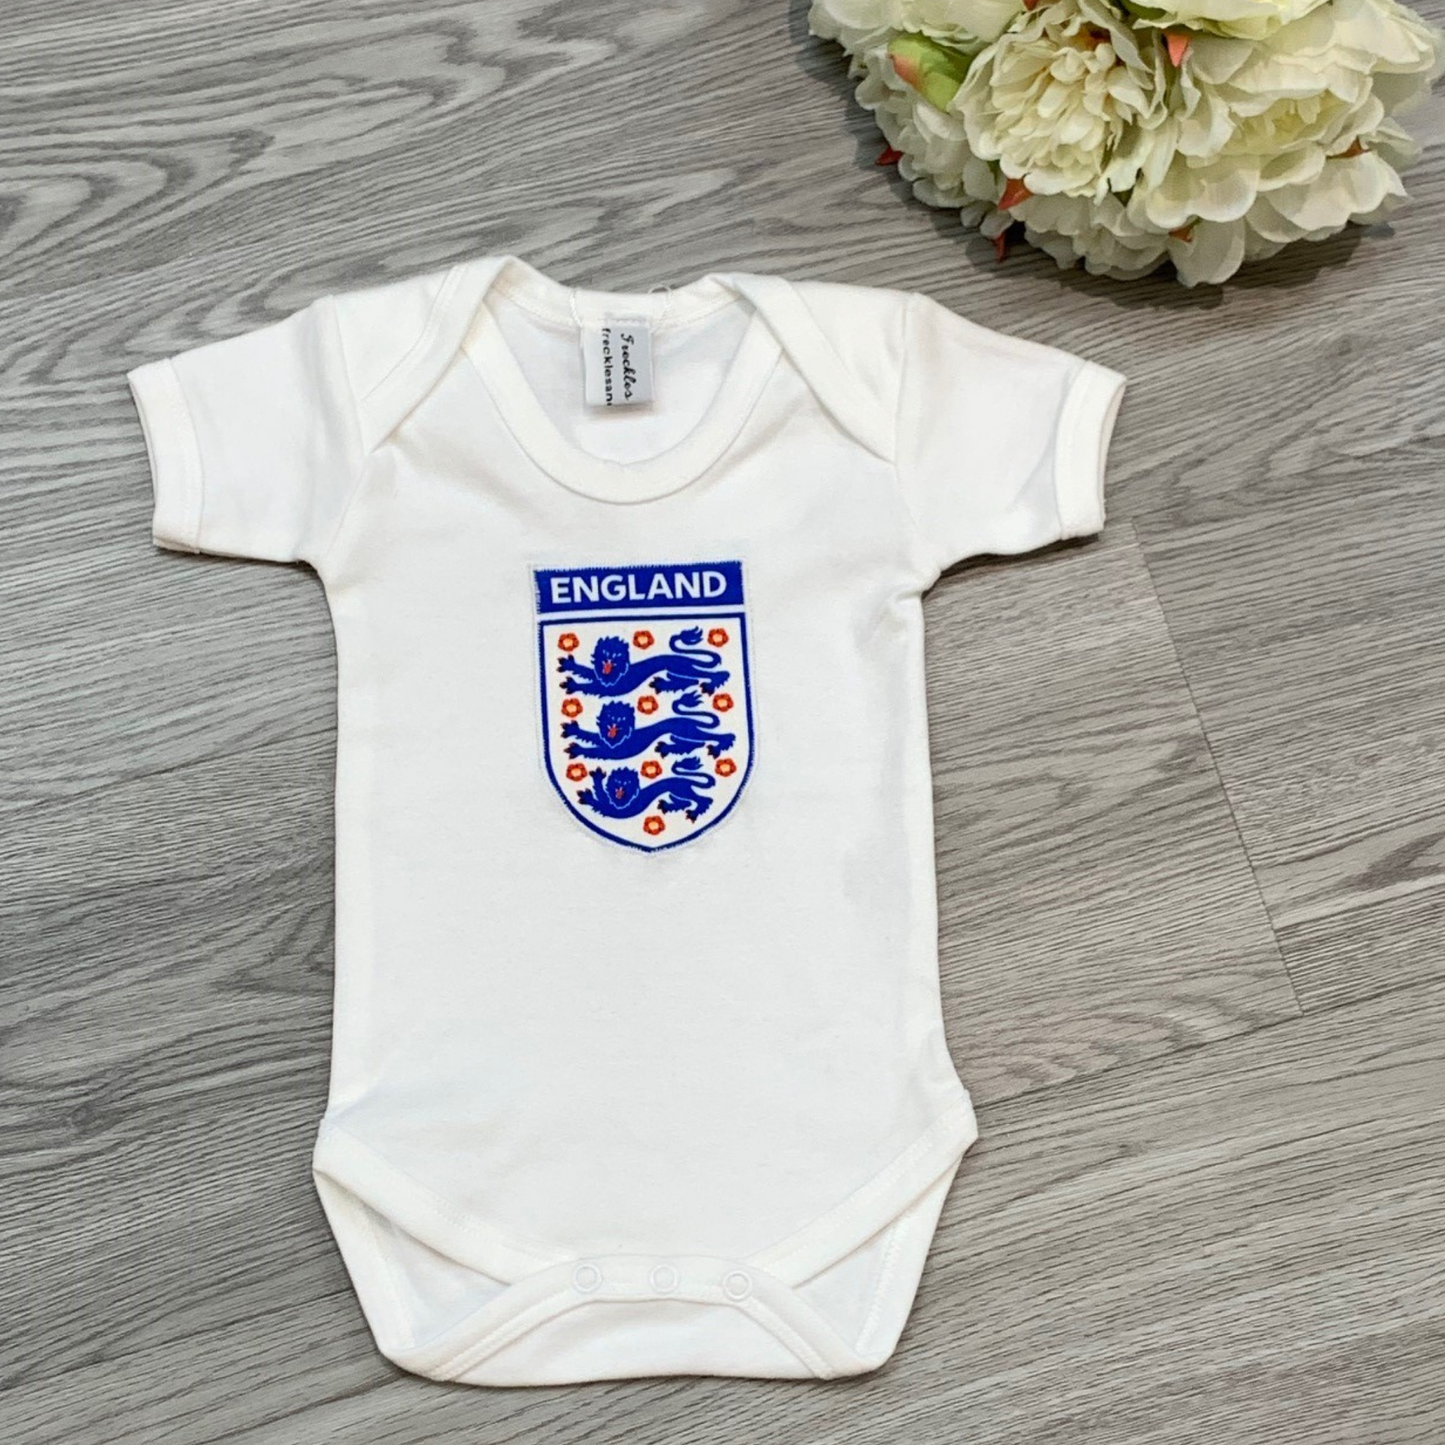 England Baby Onesie Bodysuit